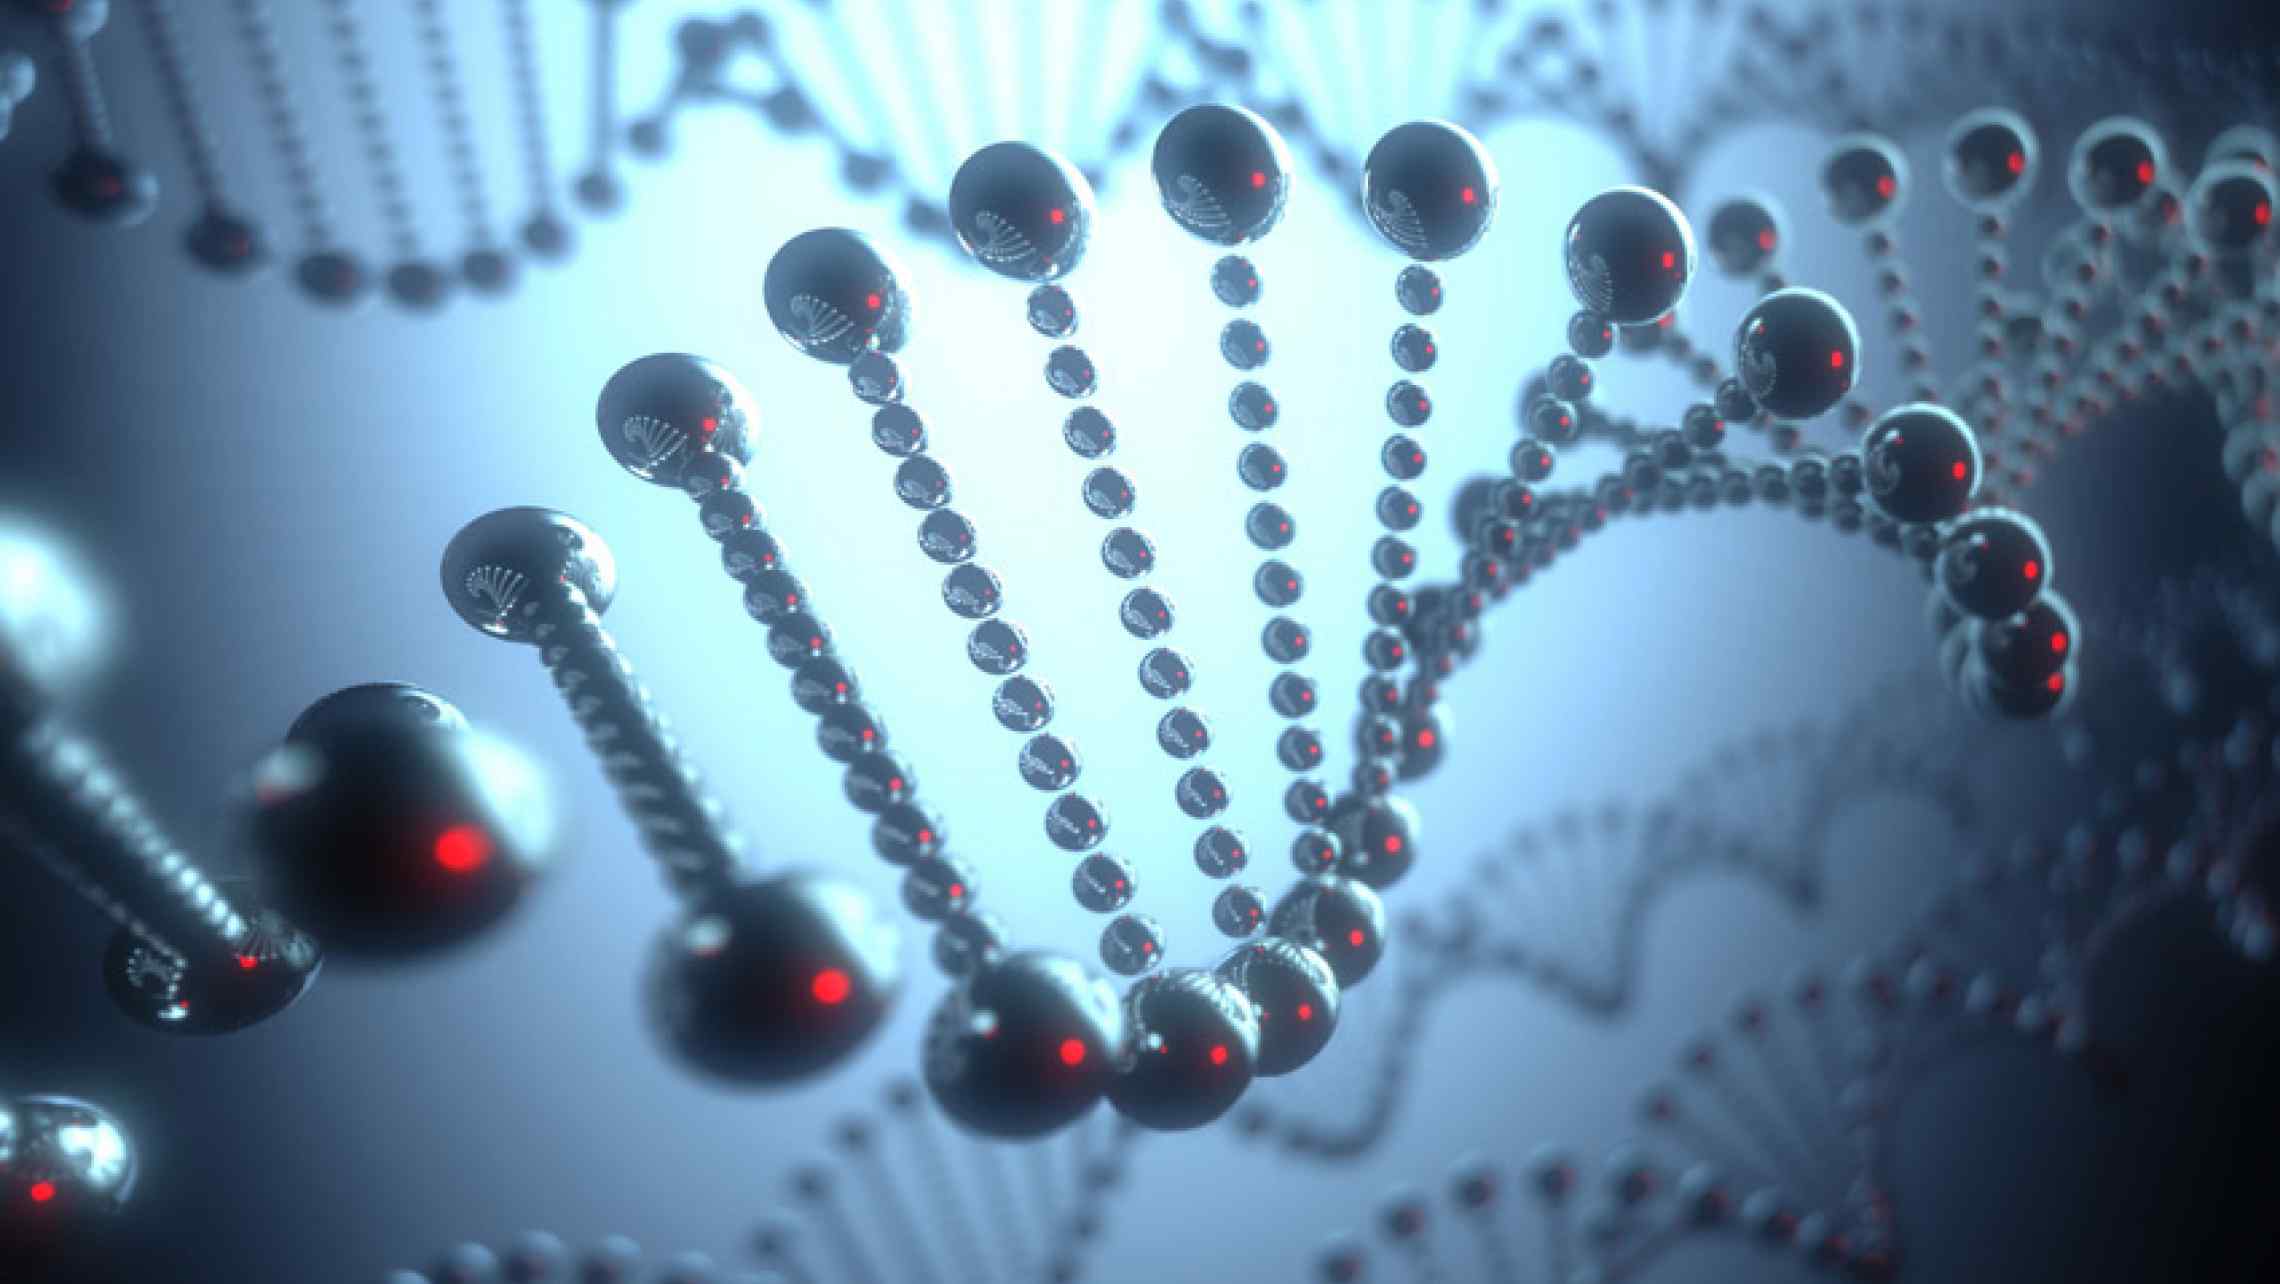 SCIENTISTS MAKE BREAKTHROUGH IN MICRO-ROBOTICS USING DNA